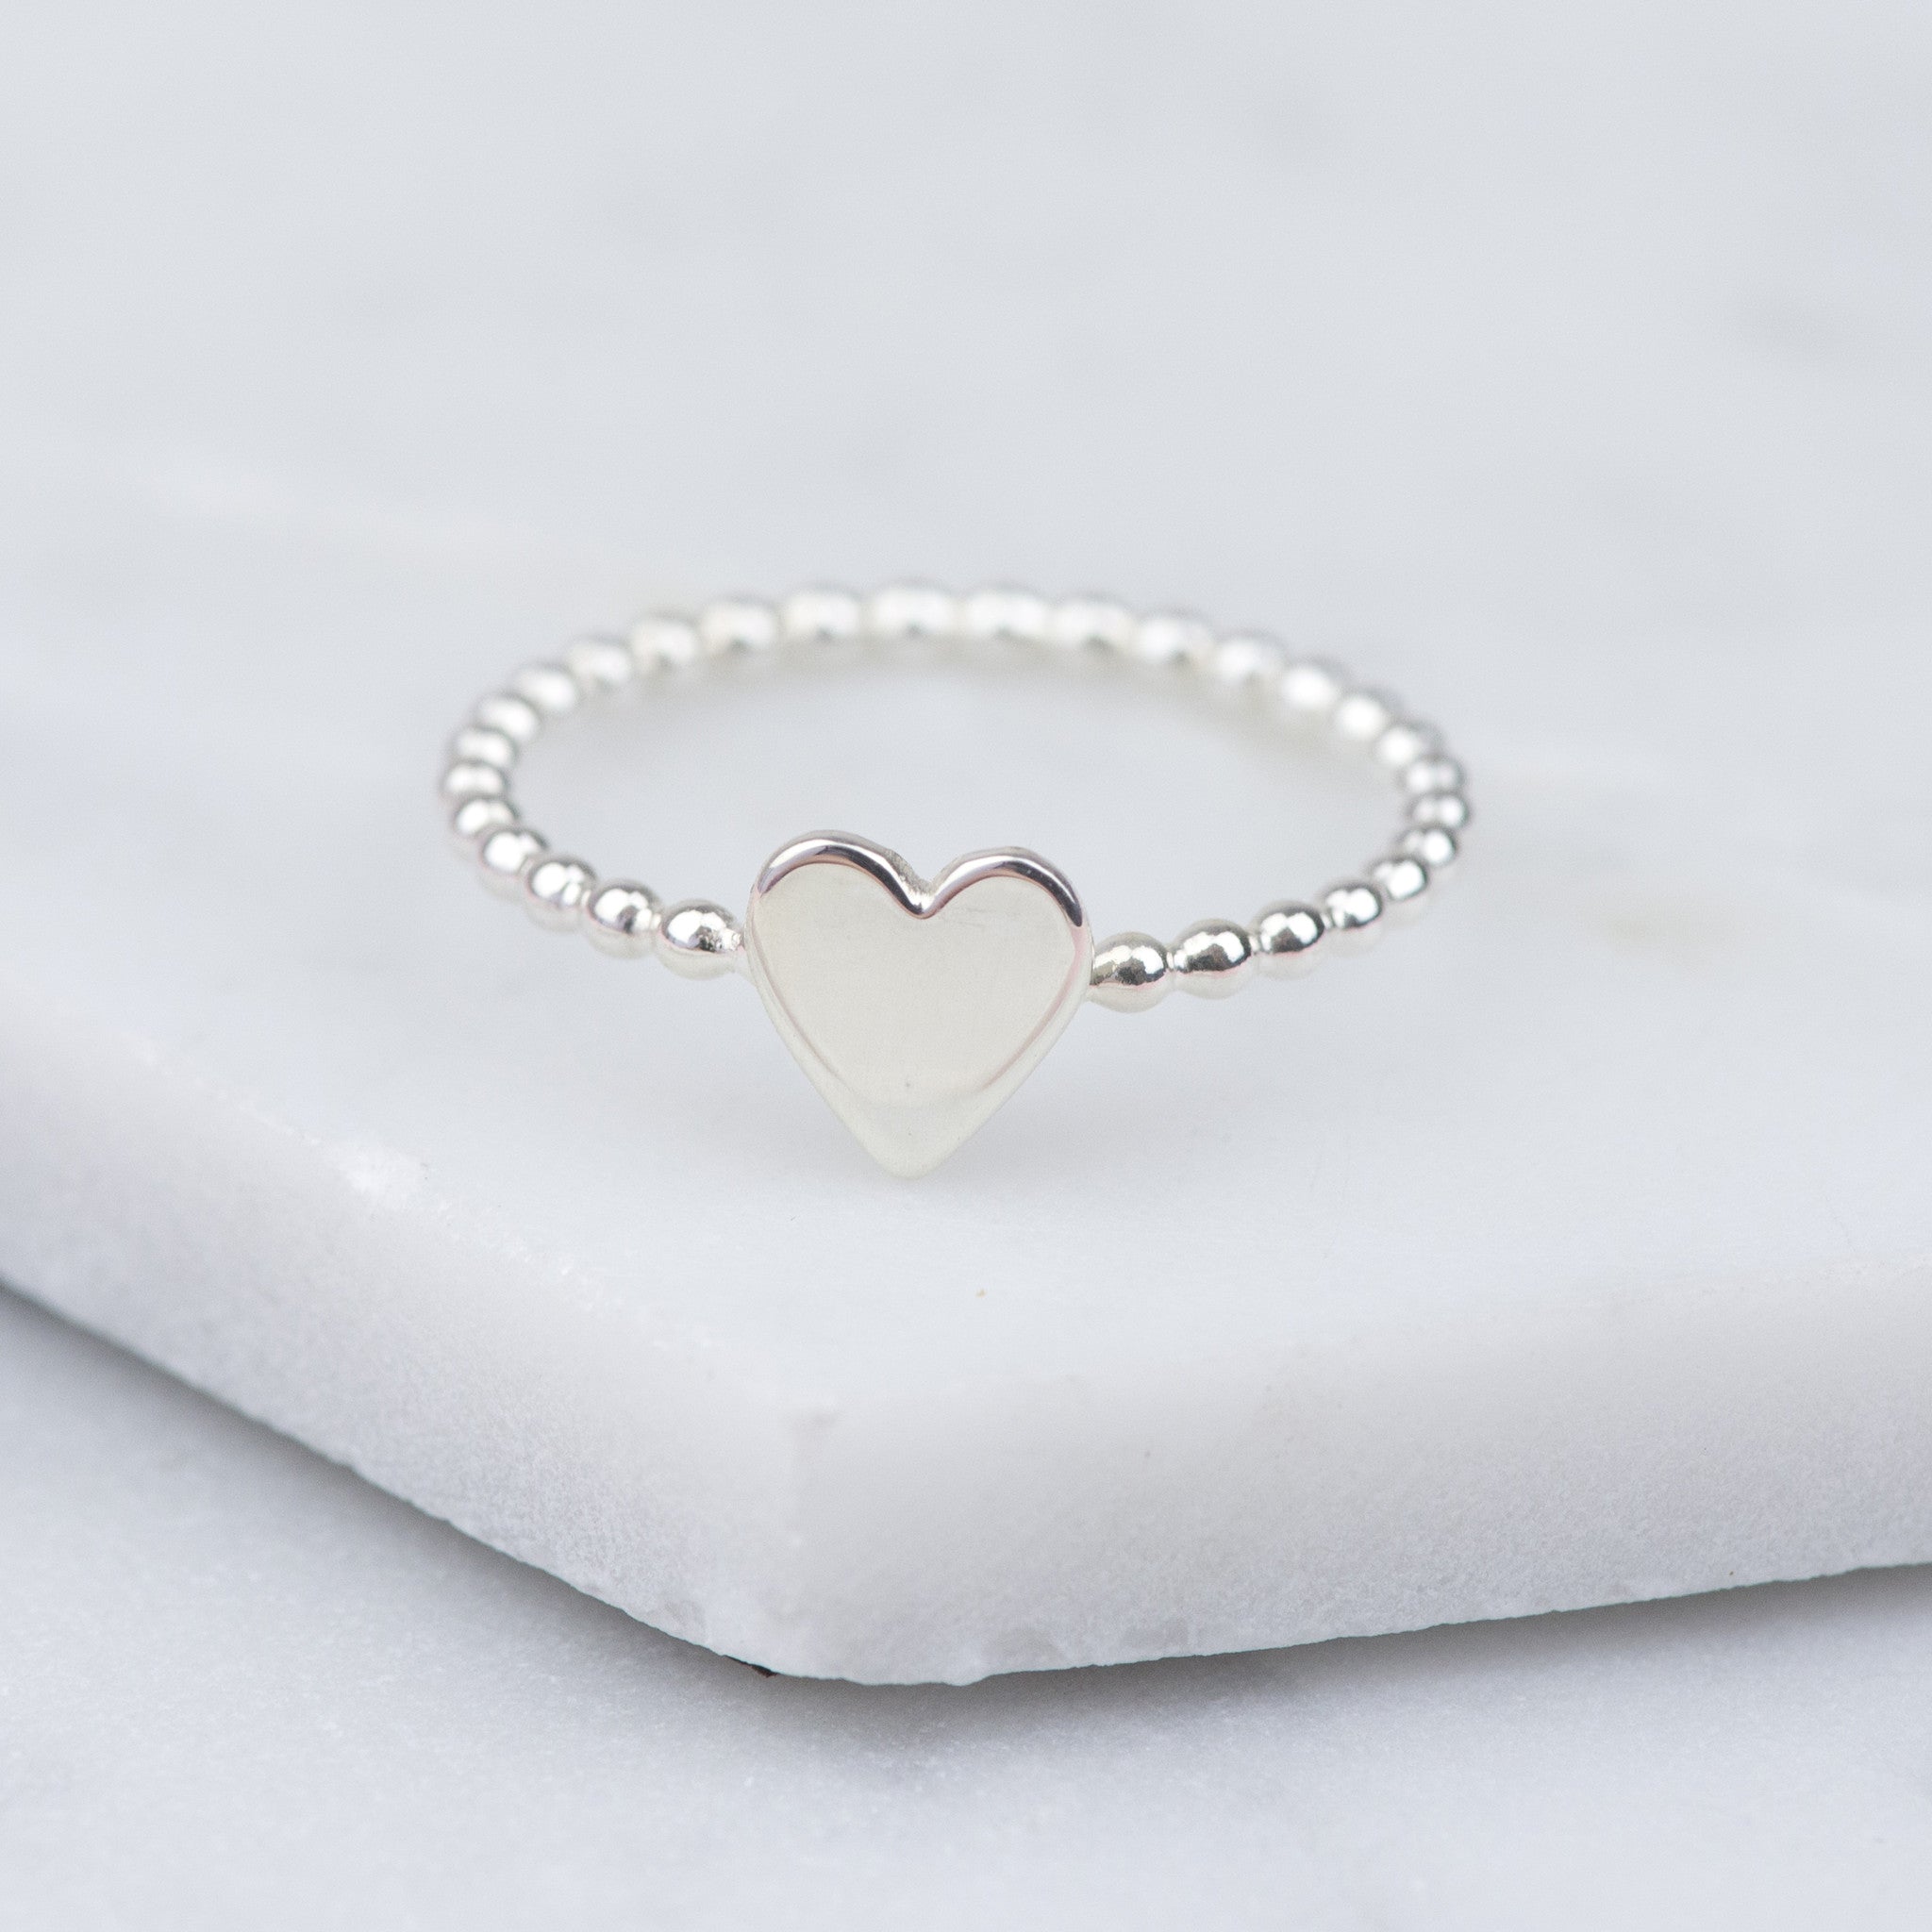 Handmade Sterling Silver Heart Ring